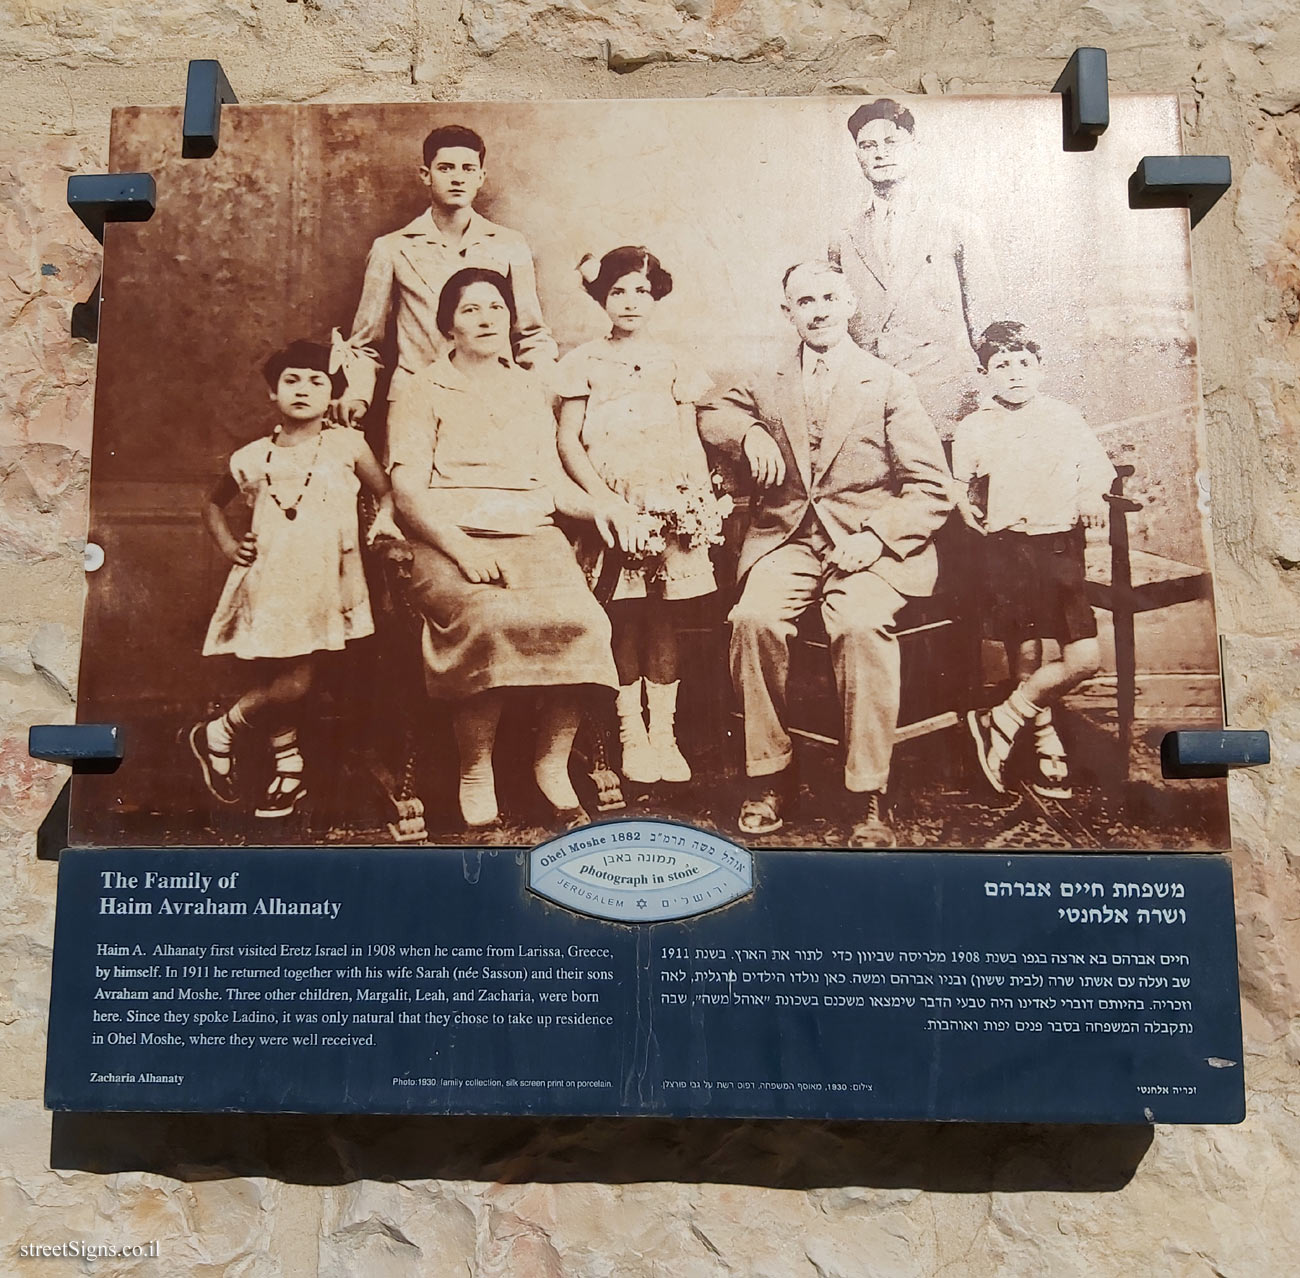 Jerusalem - Photograph in stone - The Family of Haim Avraham Alhanaty